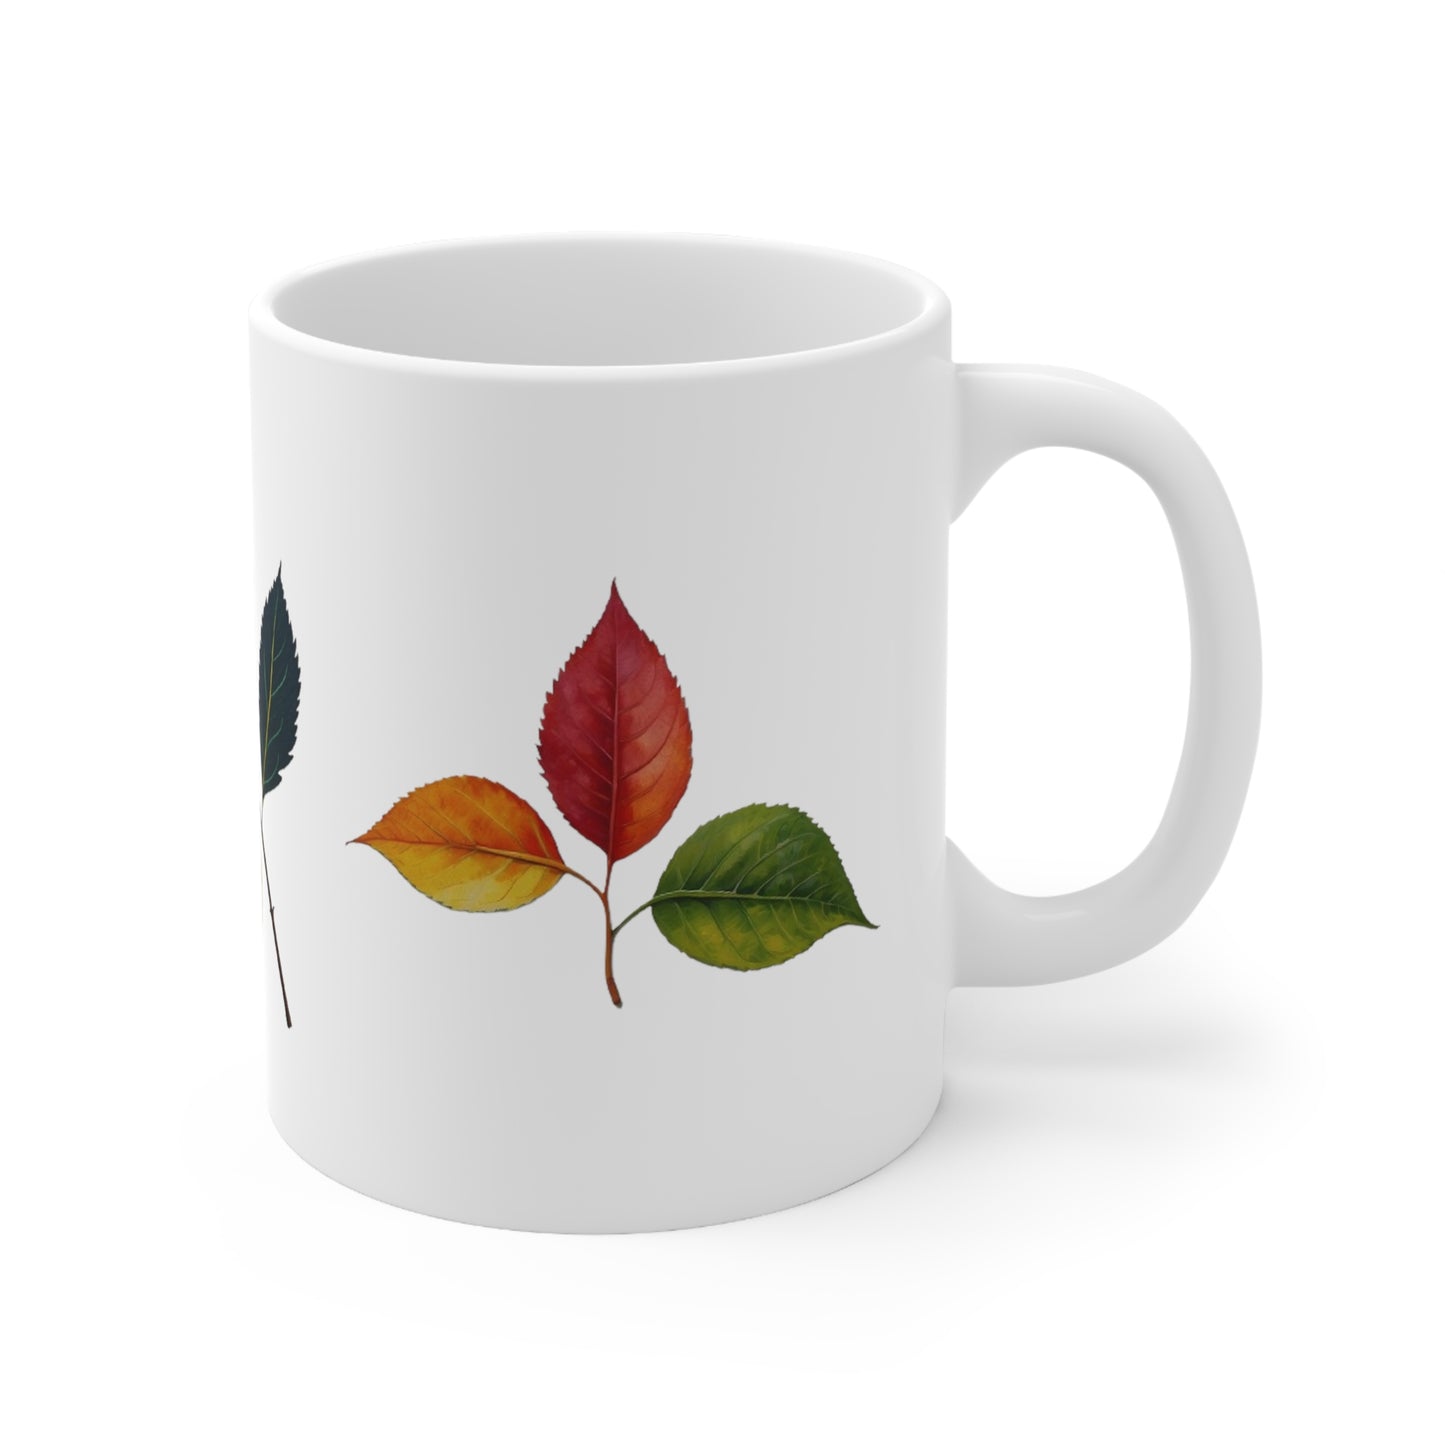 Colourful Ash Leaves Mug - Ceramic Coffee Mug 11oz